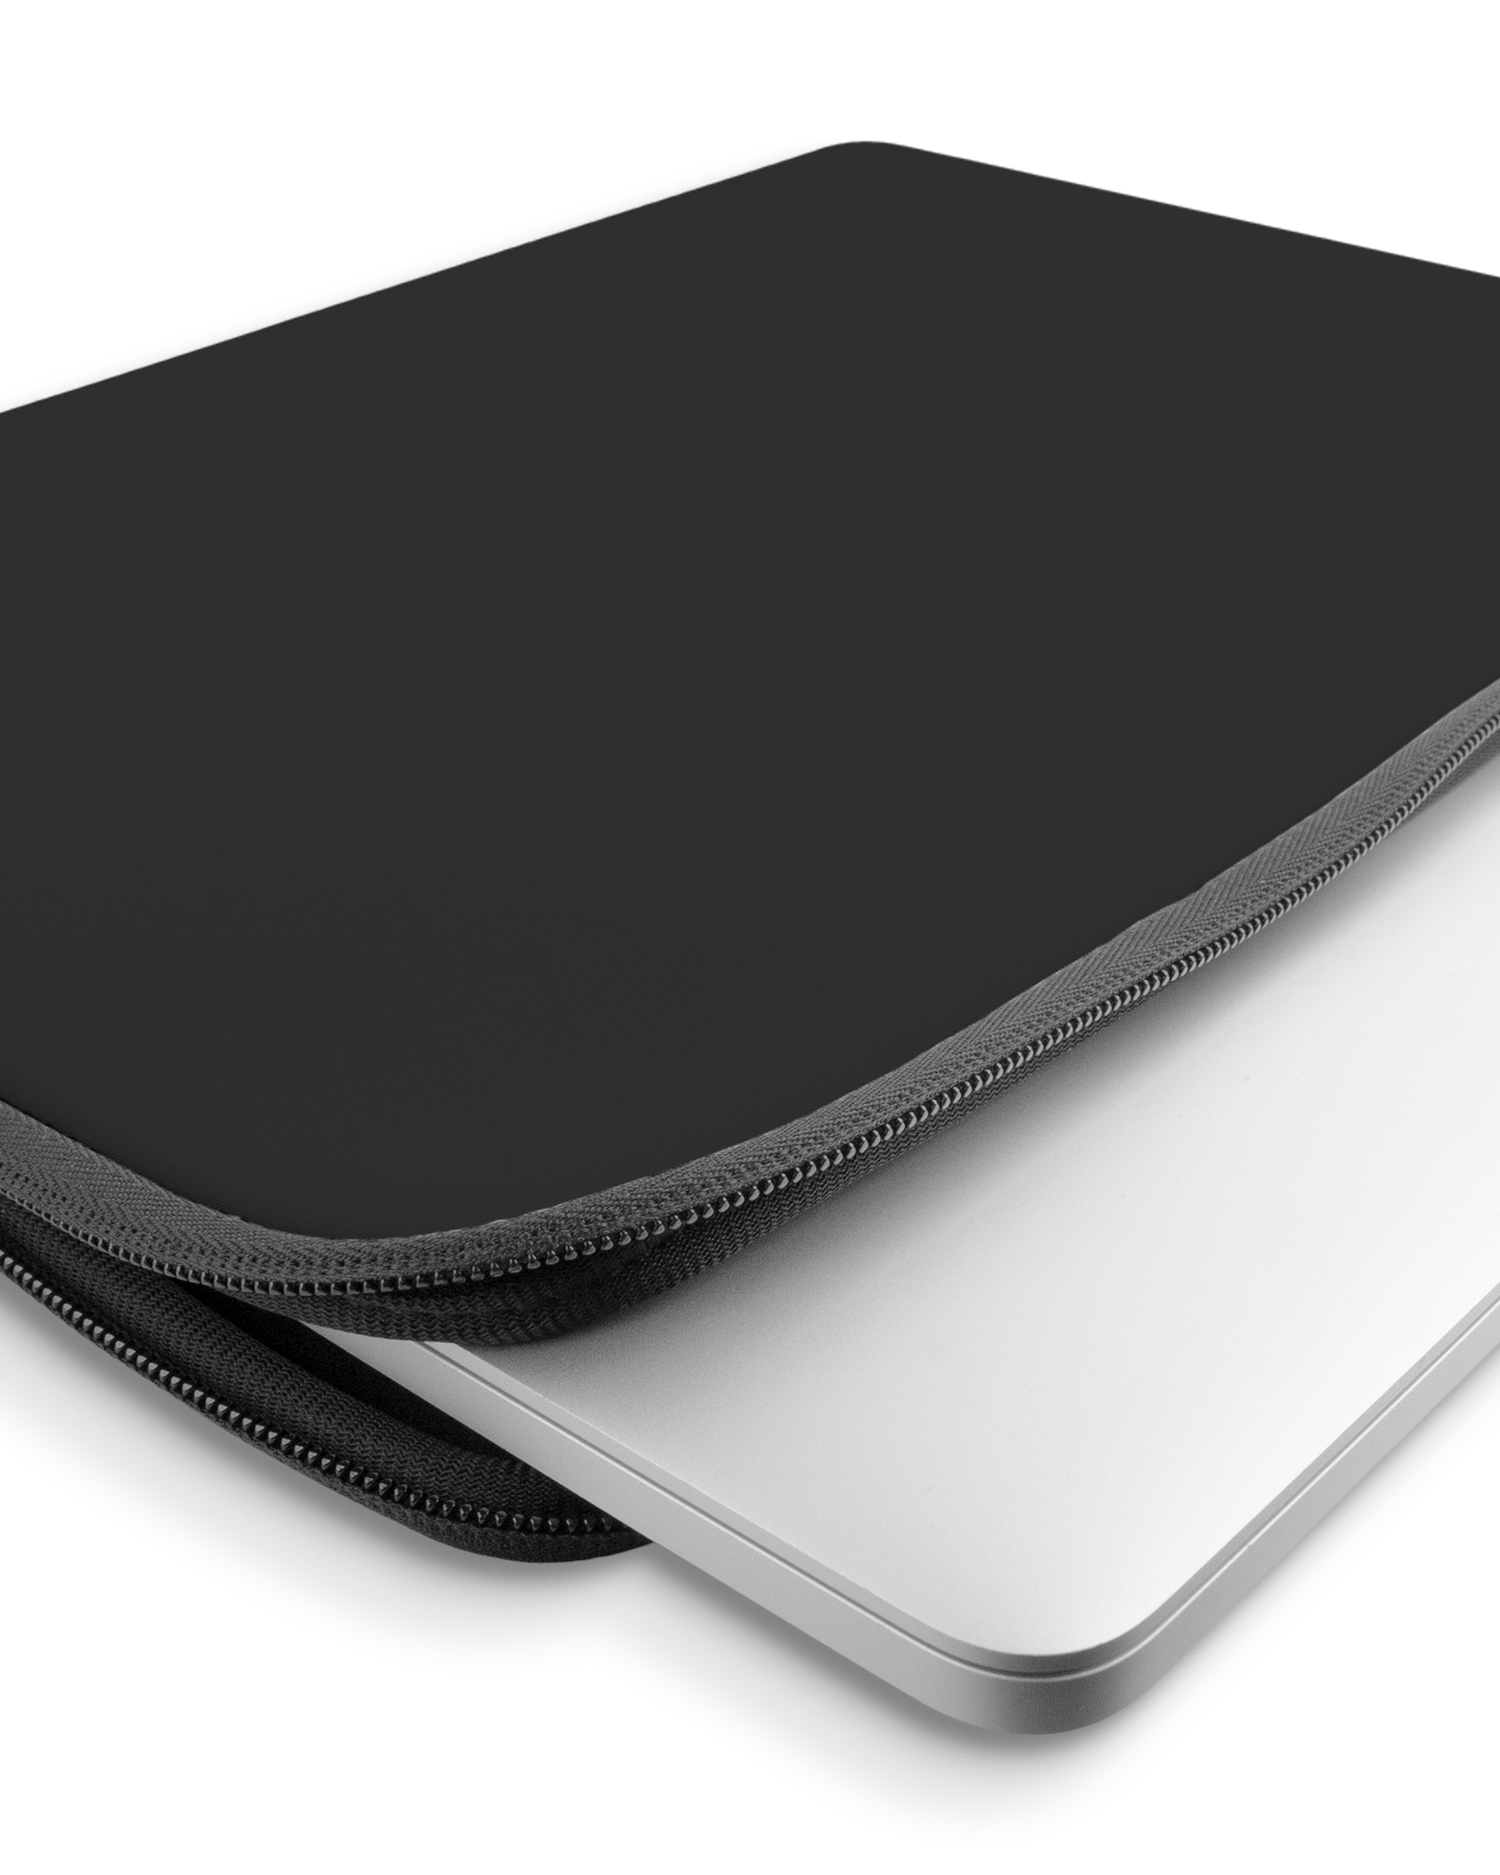 BLACK Laptophülle 15-16 Zoll mit Gerät im Inneren